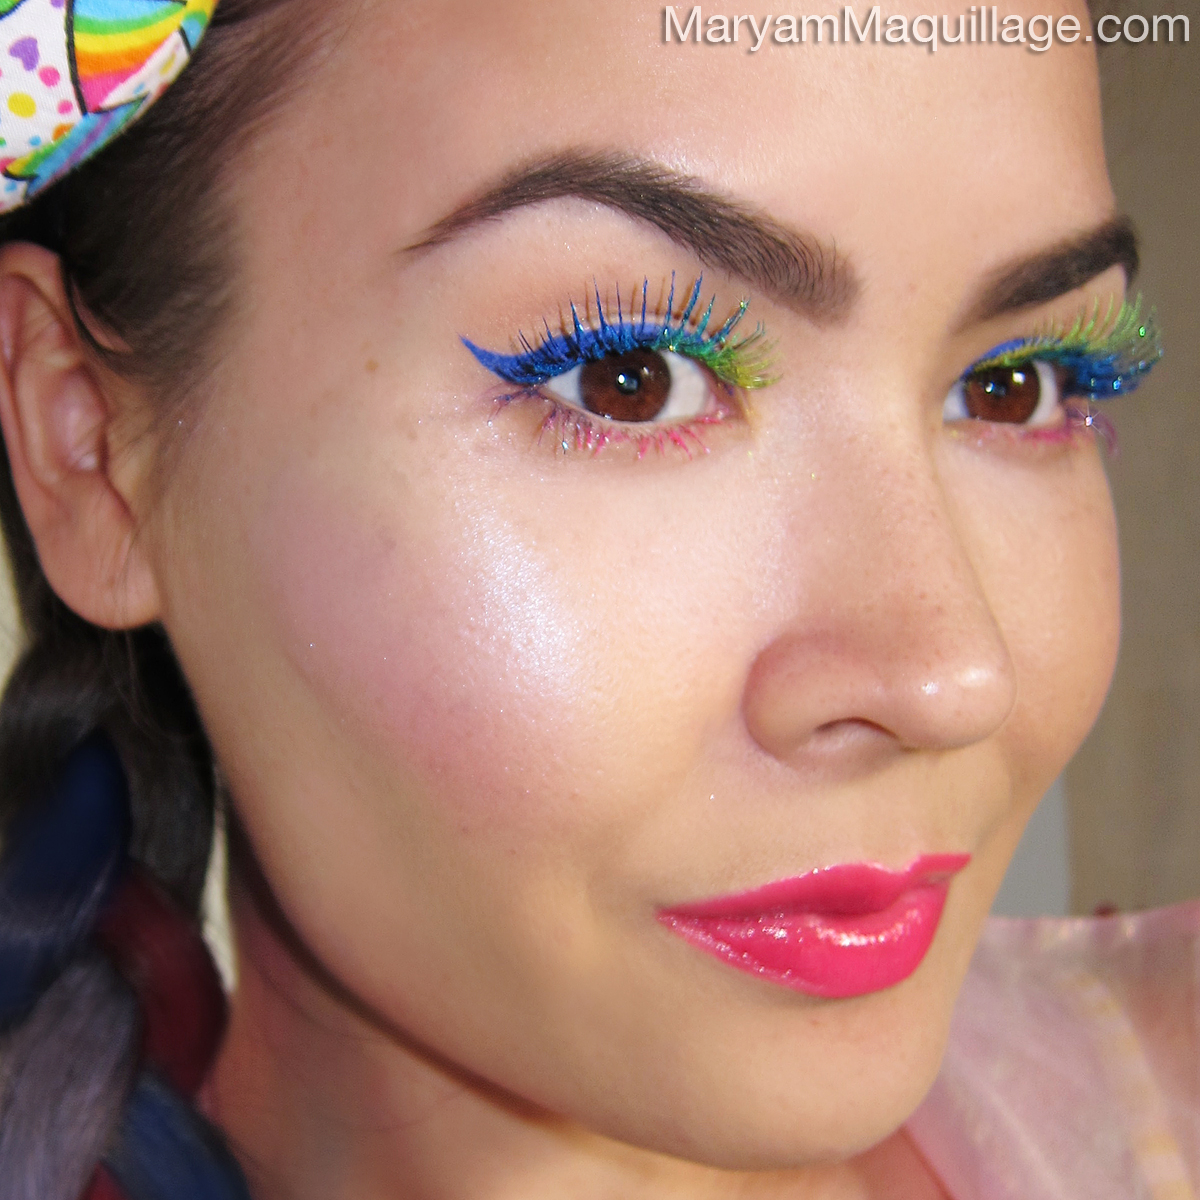 Maryam Maquillage: Celebrate Pride in Happy Rainbows!